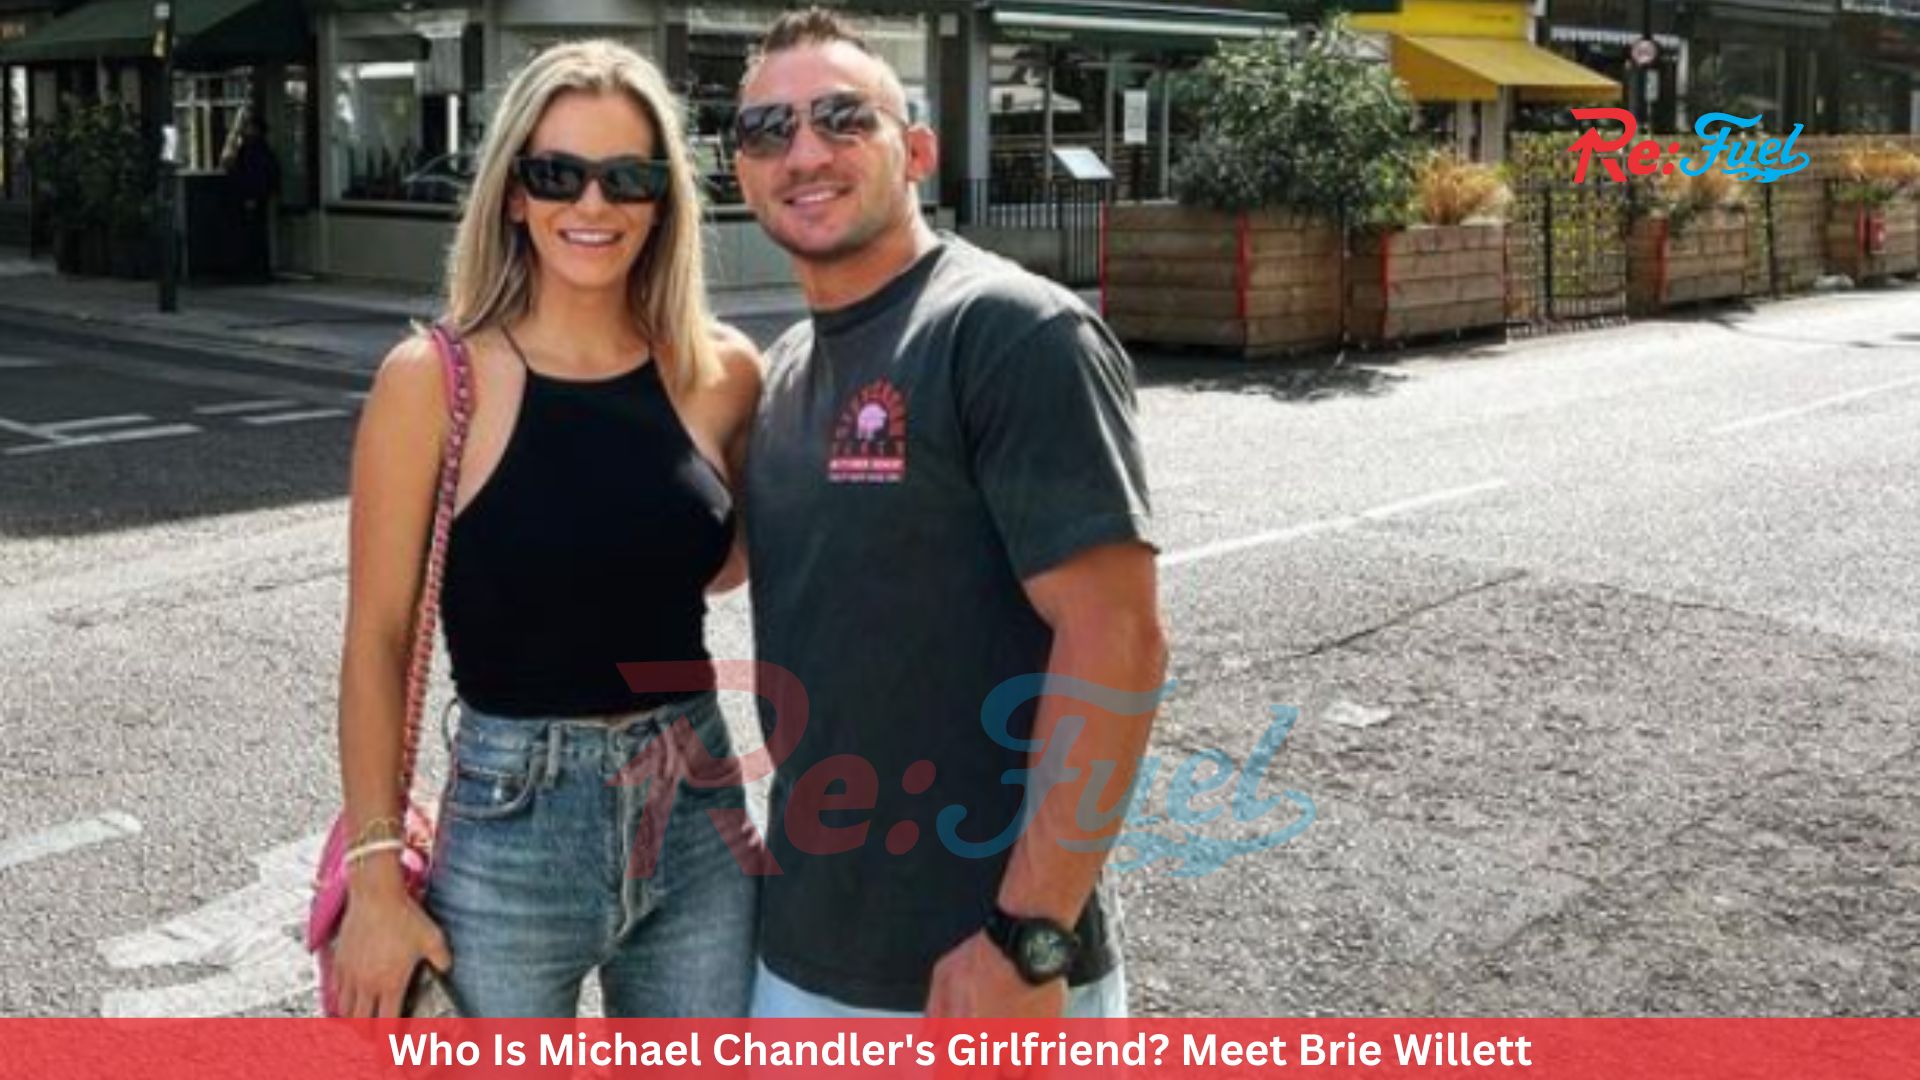 Who Is Michael Chandler's Girlfriend? Meet Brie Willett